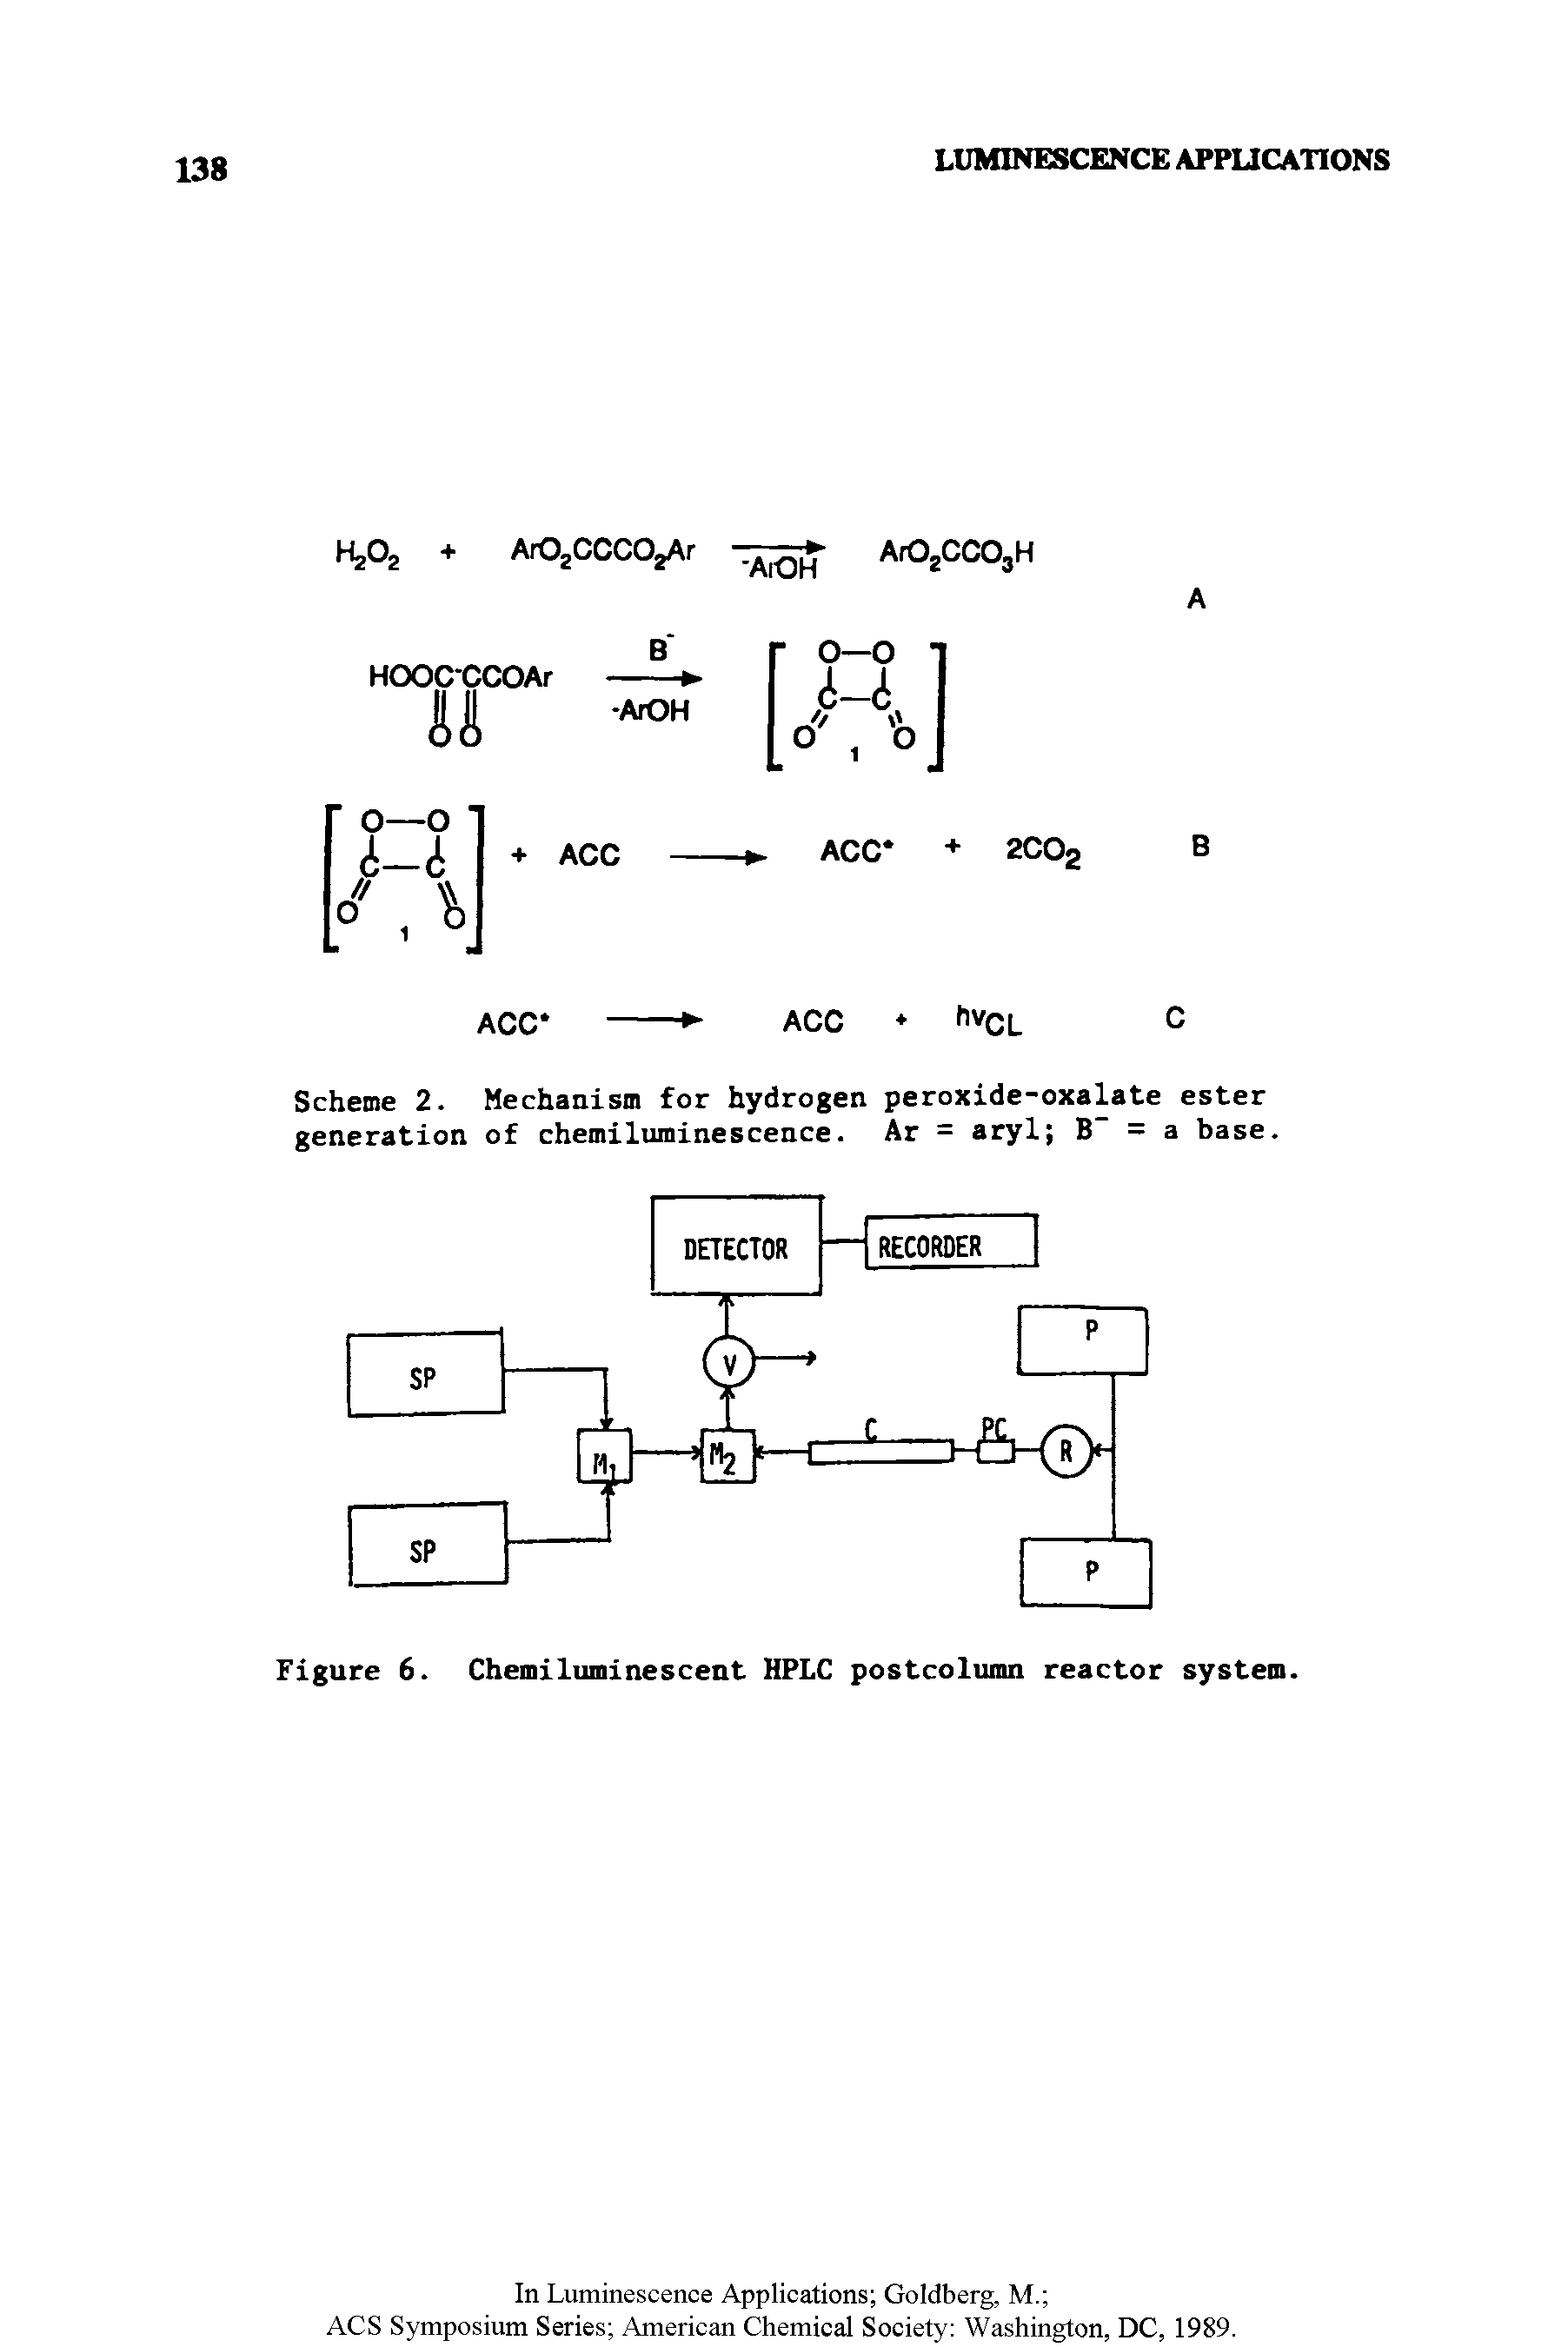 Figure 6. Chemiluminescent HPLC postcolumn reactor system.